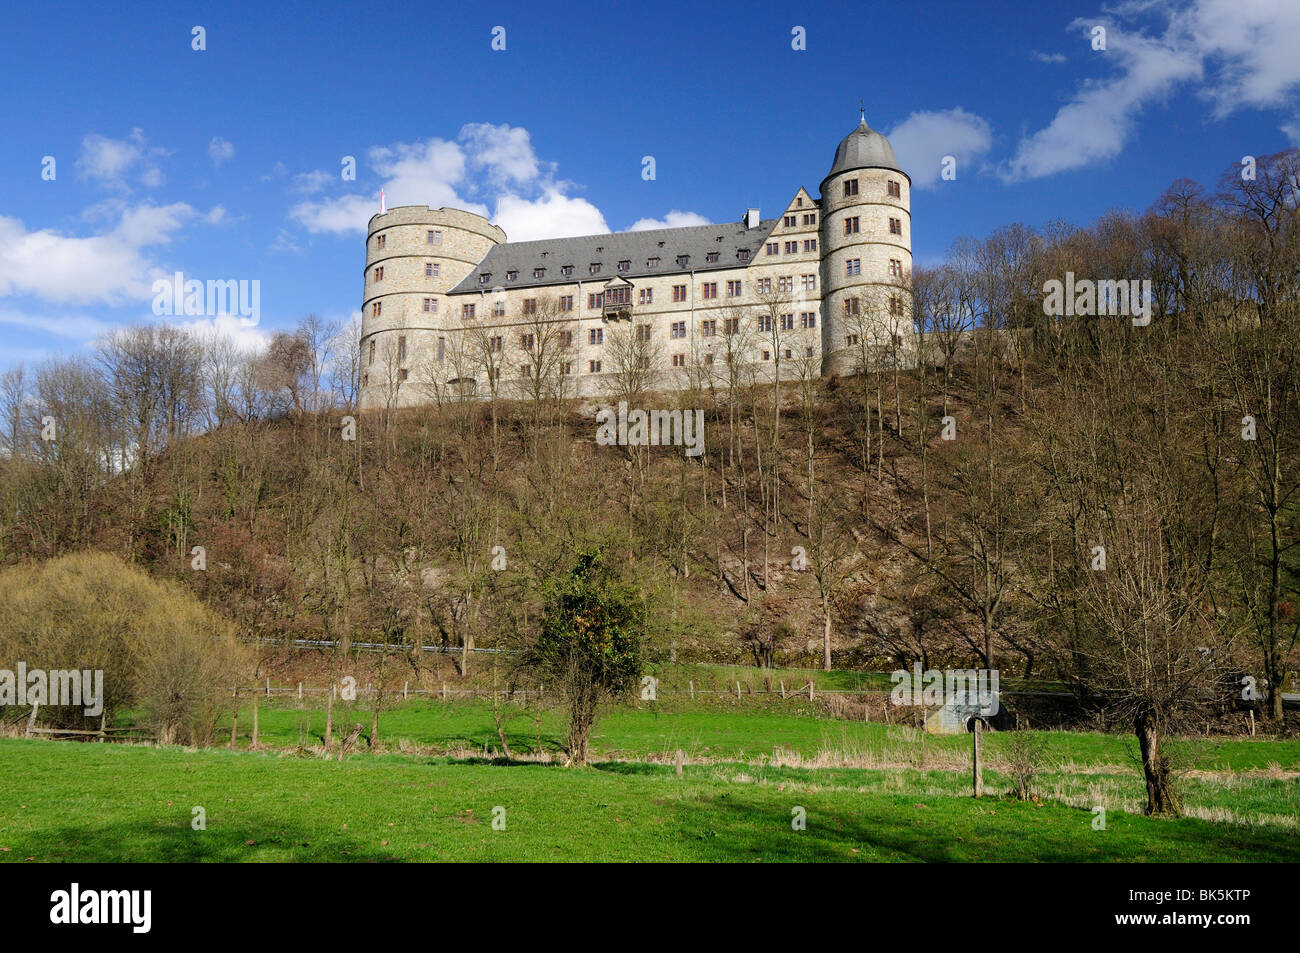 Wewelsburg Nazi Castle built by Heinrich Himmler, Germany Stock Photo